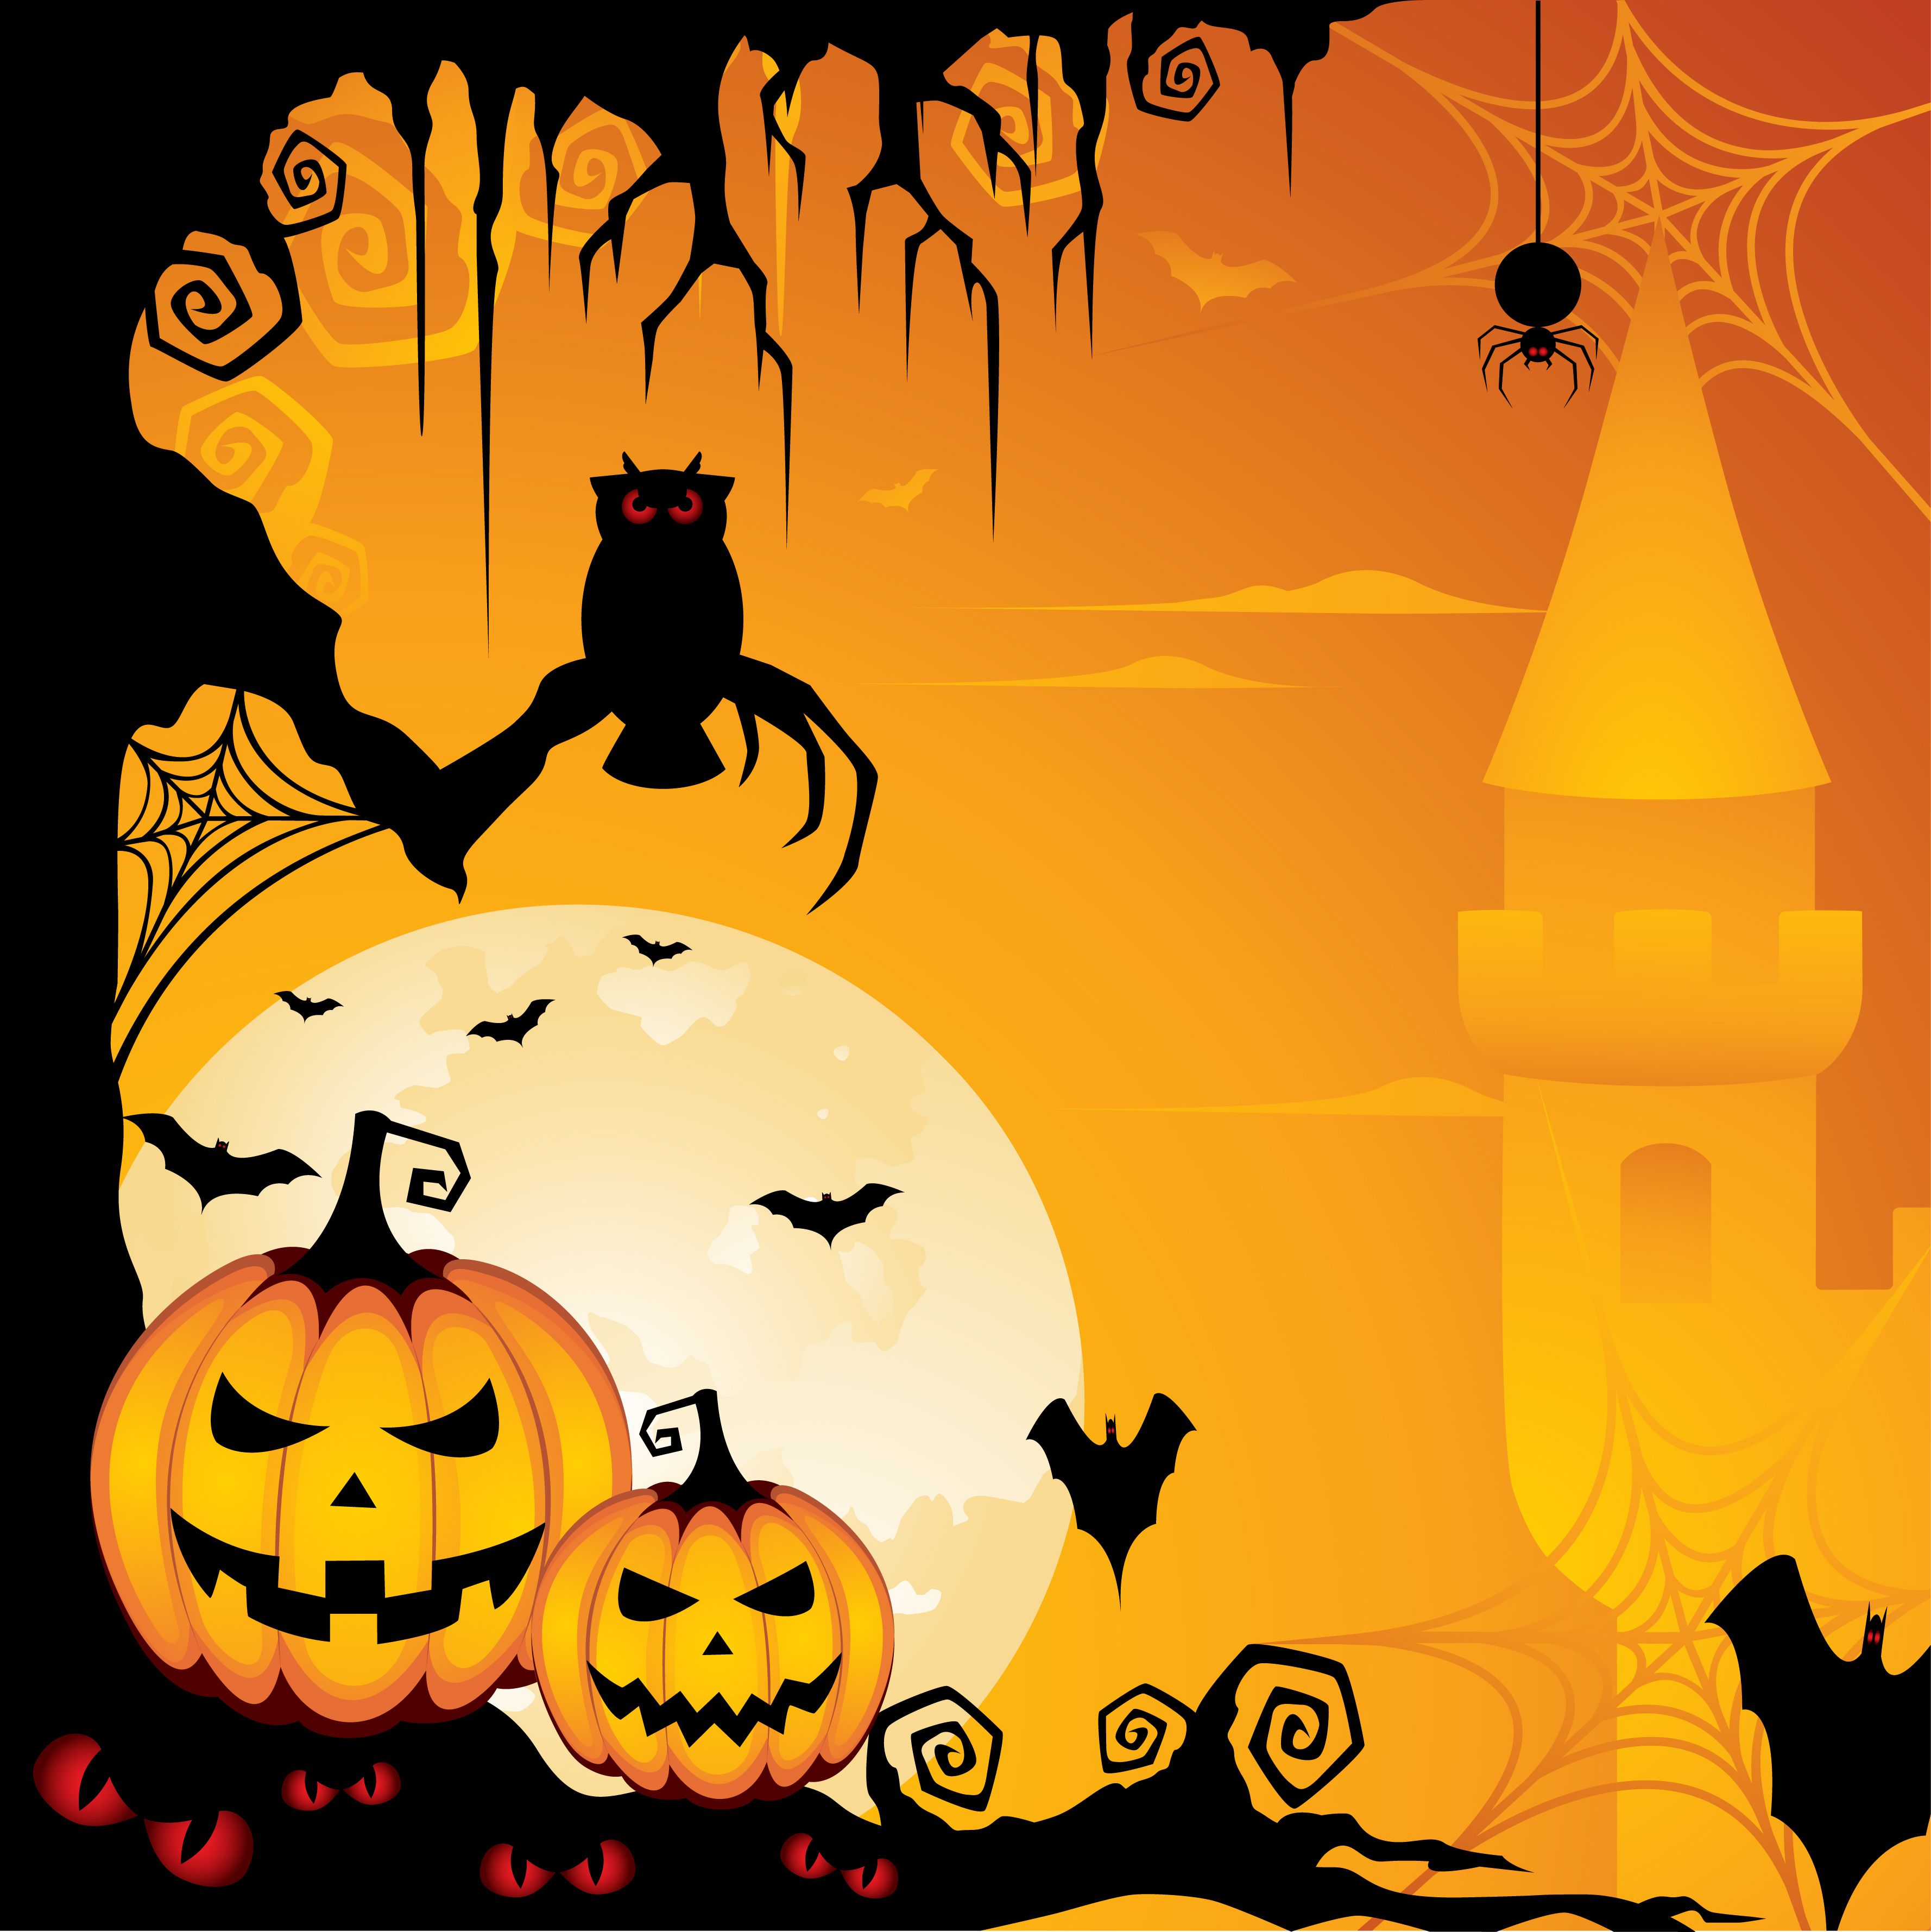 Can't wait for Halloween!!!. Halloween prints, Halloween background, Scary halloween pumpkins